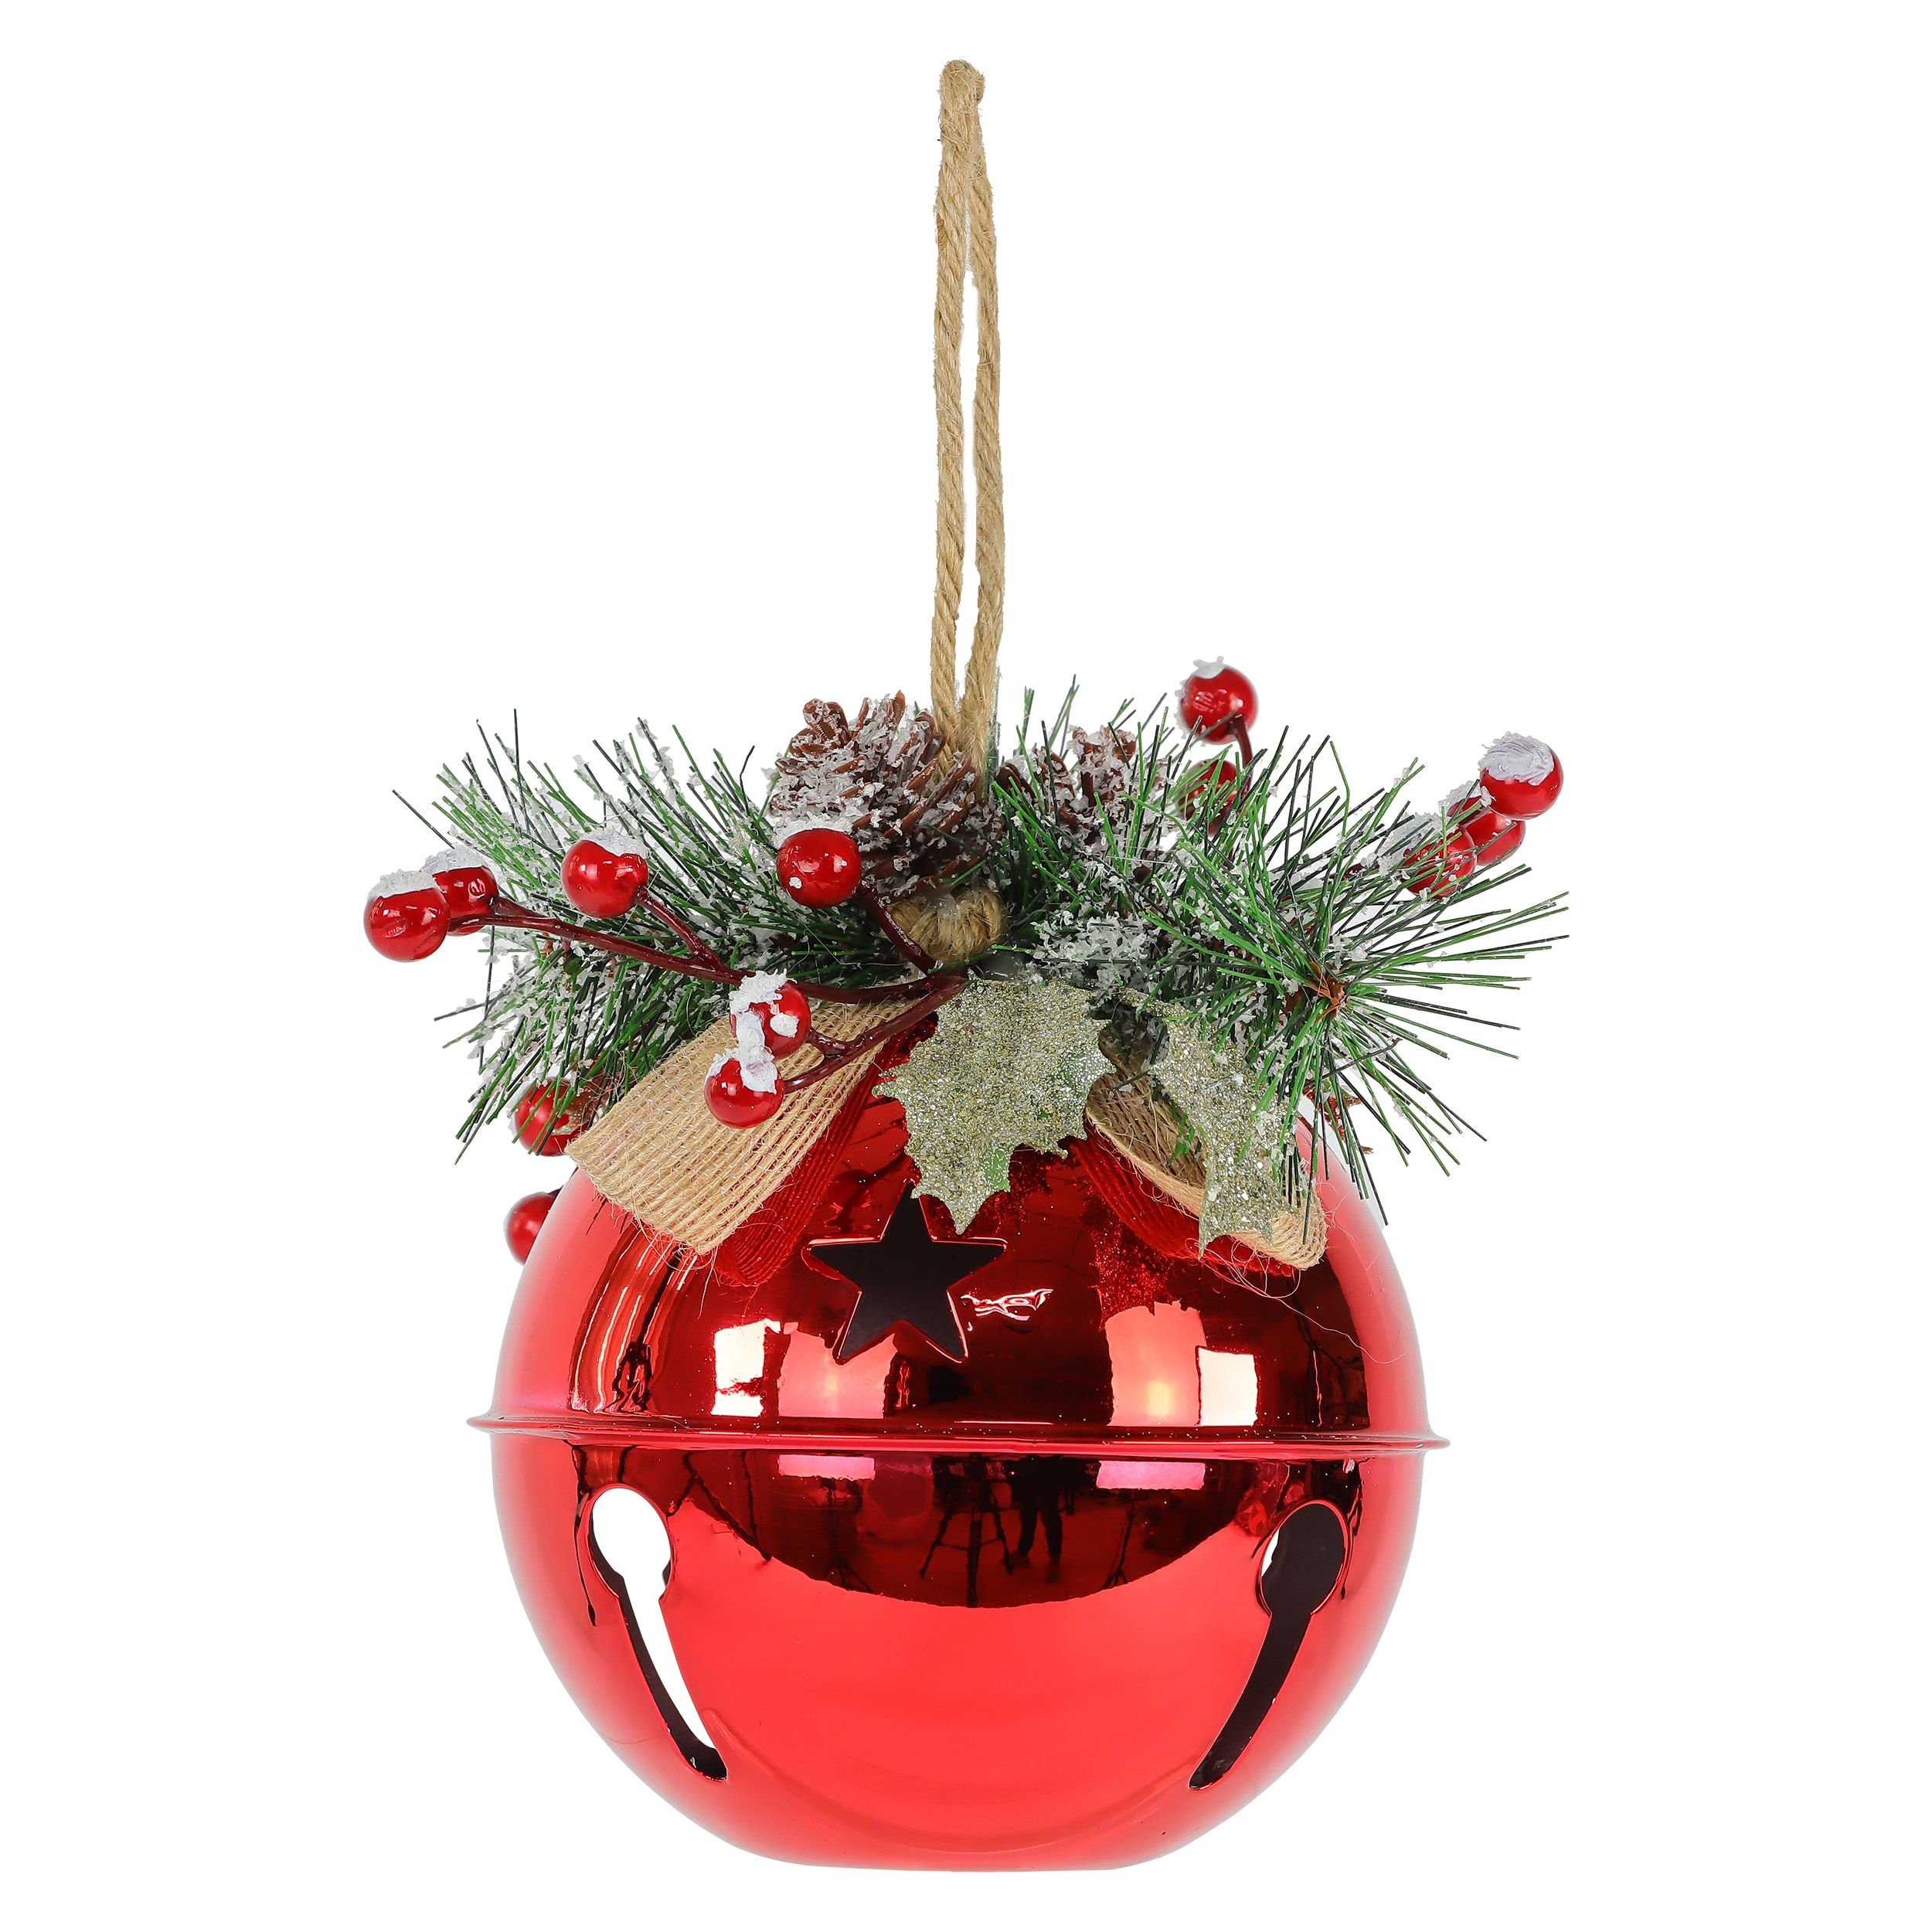 Kitchen Sink Strainer - Jingle Bells - Holiday DIY Kitchen Decor.